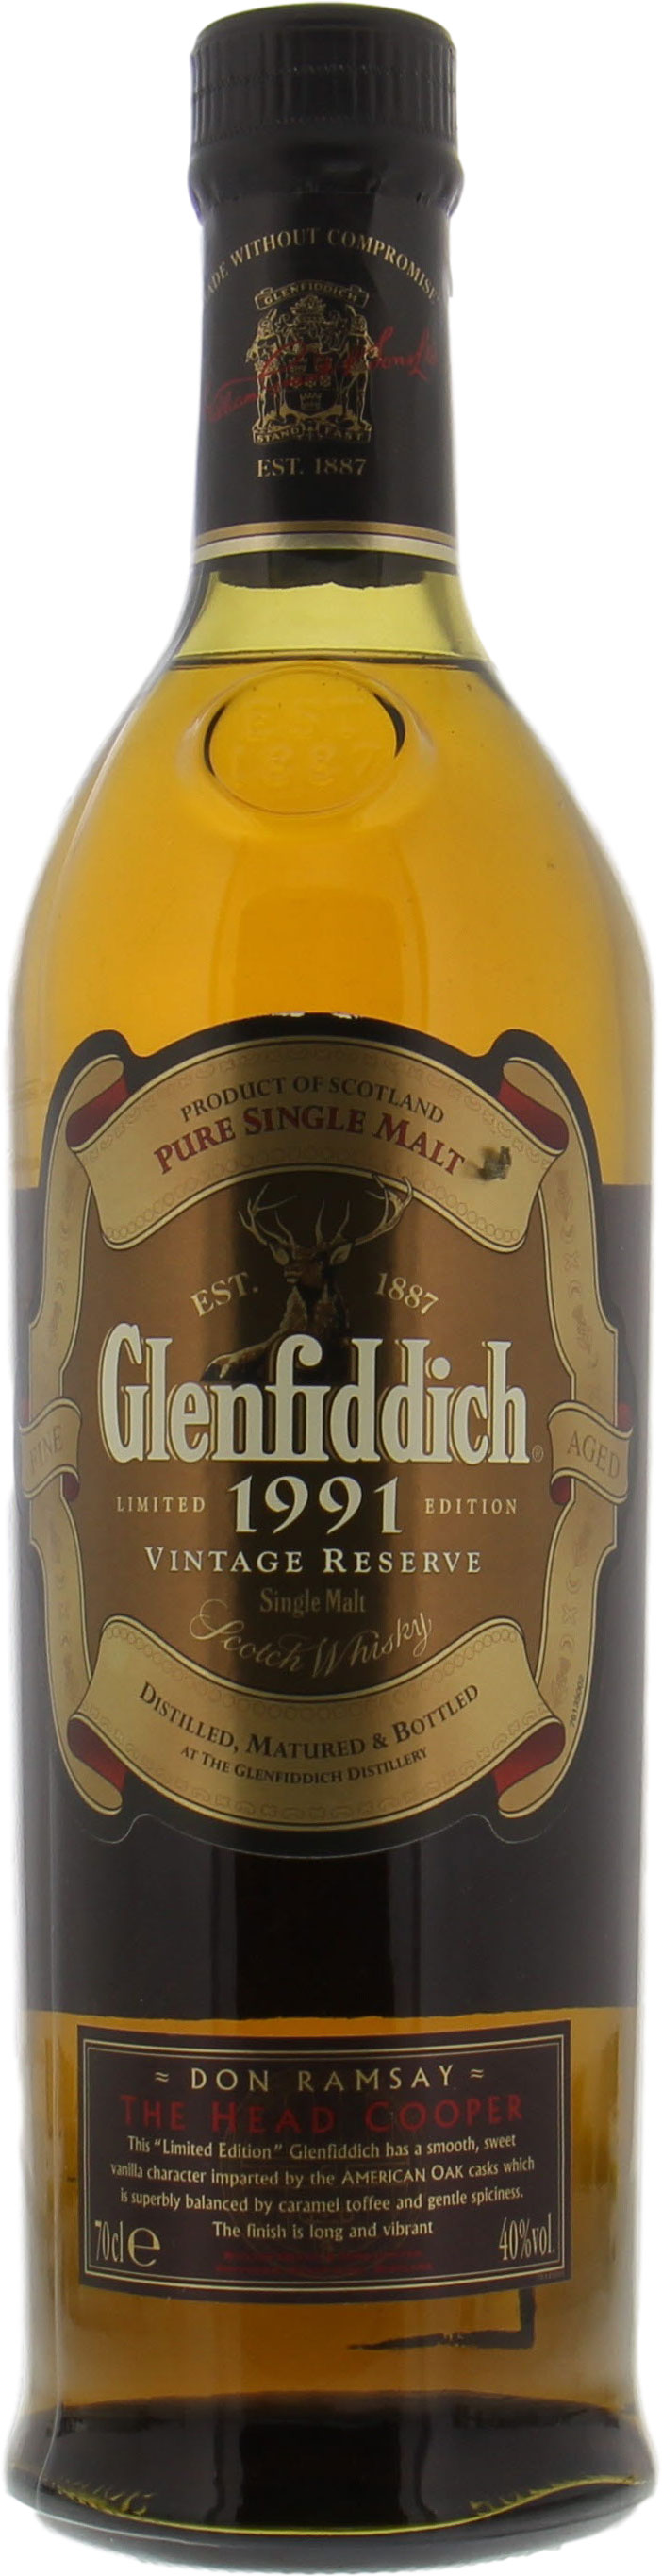 Glenfiddich - 1991 Don Ramsay 40% NV No Original Container Included!